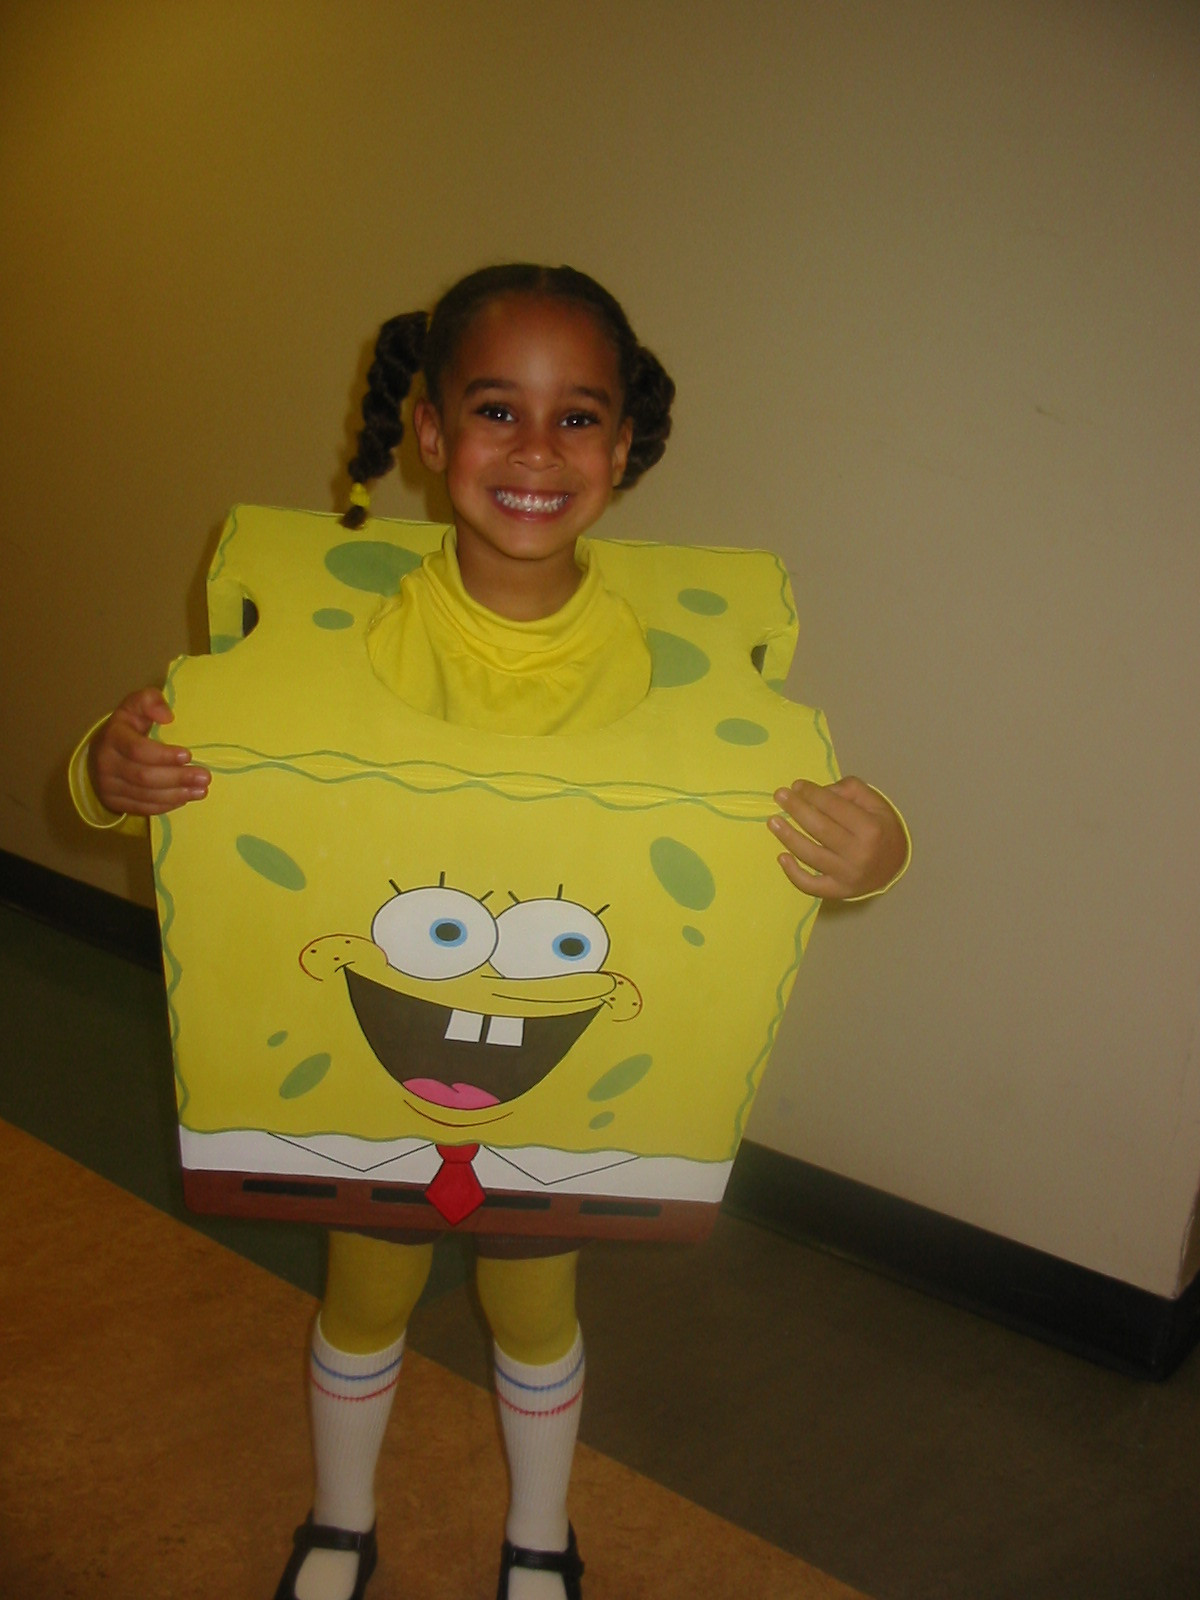 Best ideas about DIY Spongebob Costume
. Save or Pin Spongebob Squarepants costume Look just like the cartoon Now.